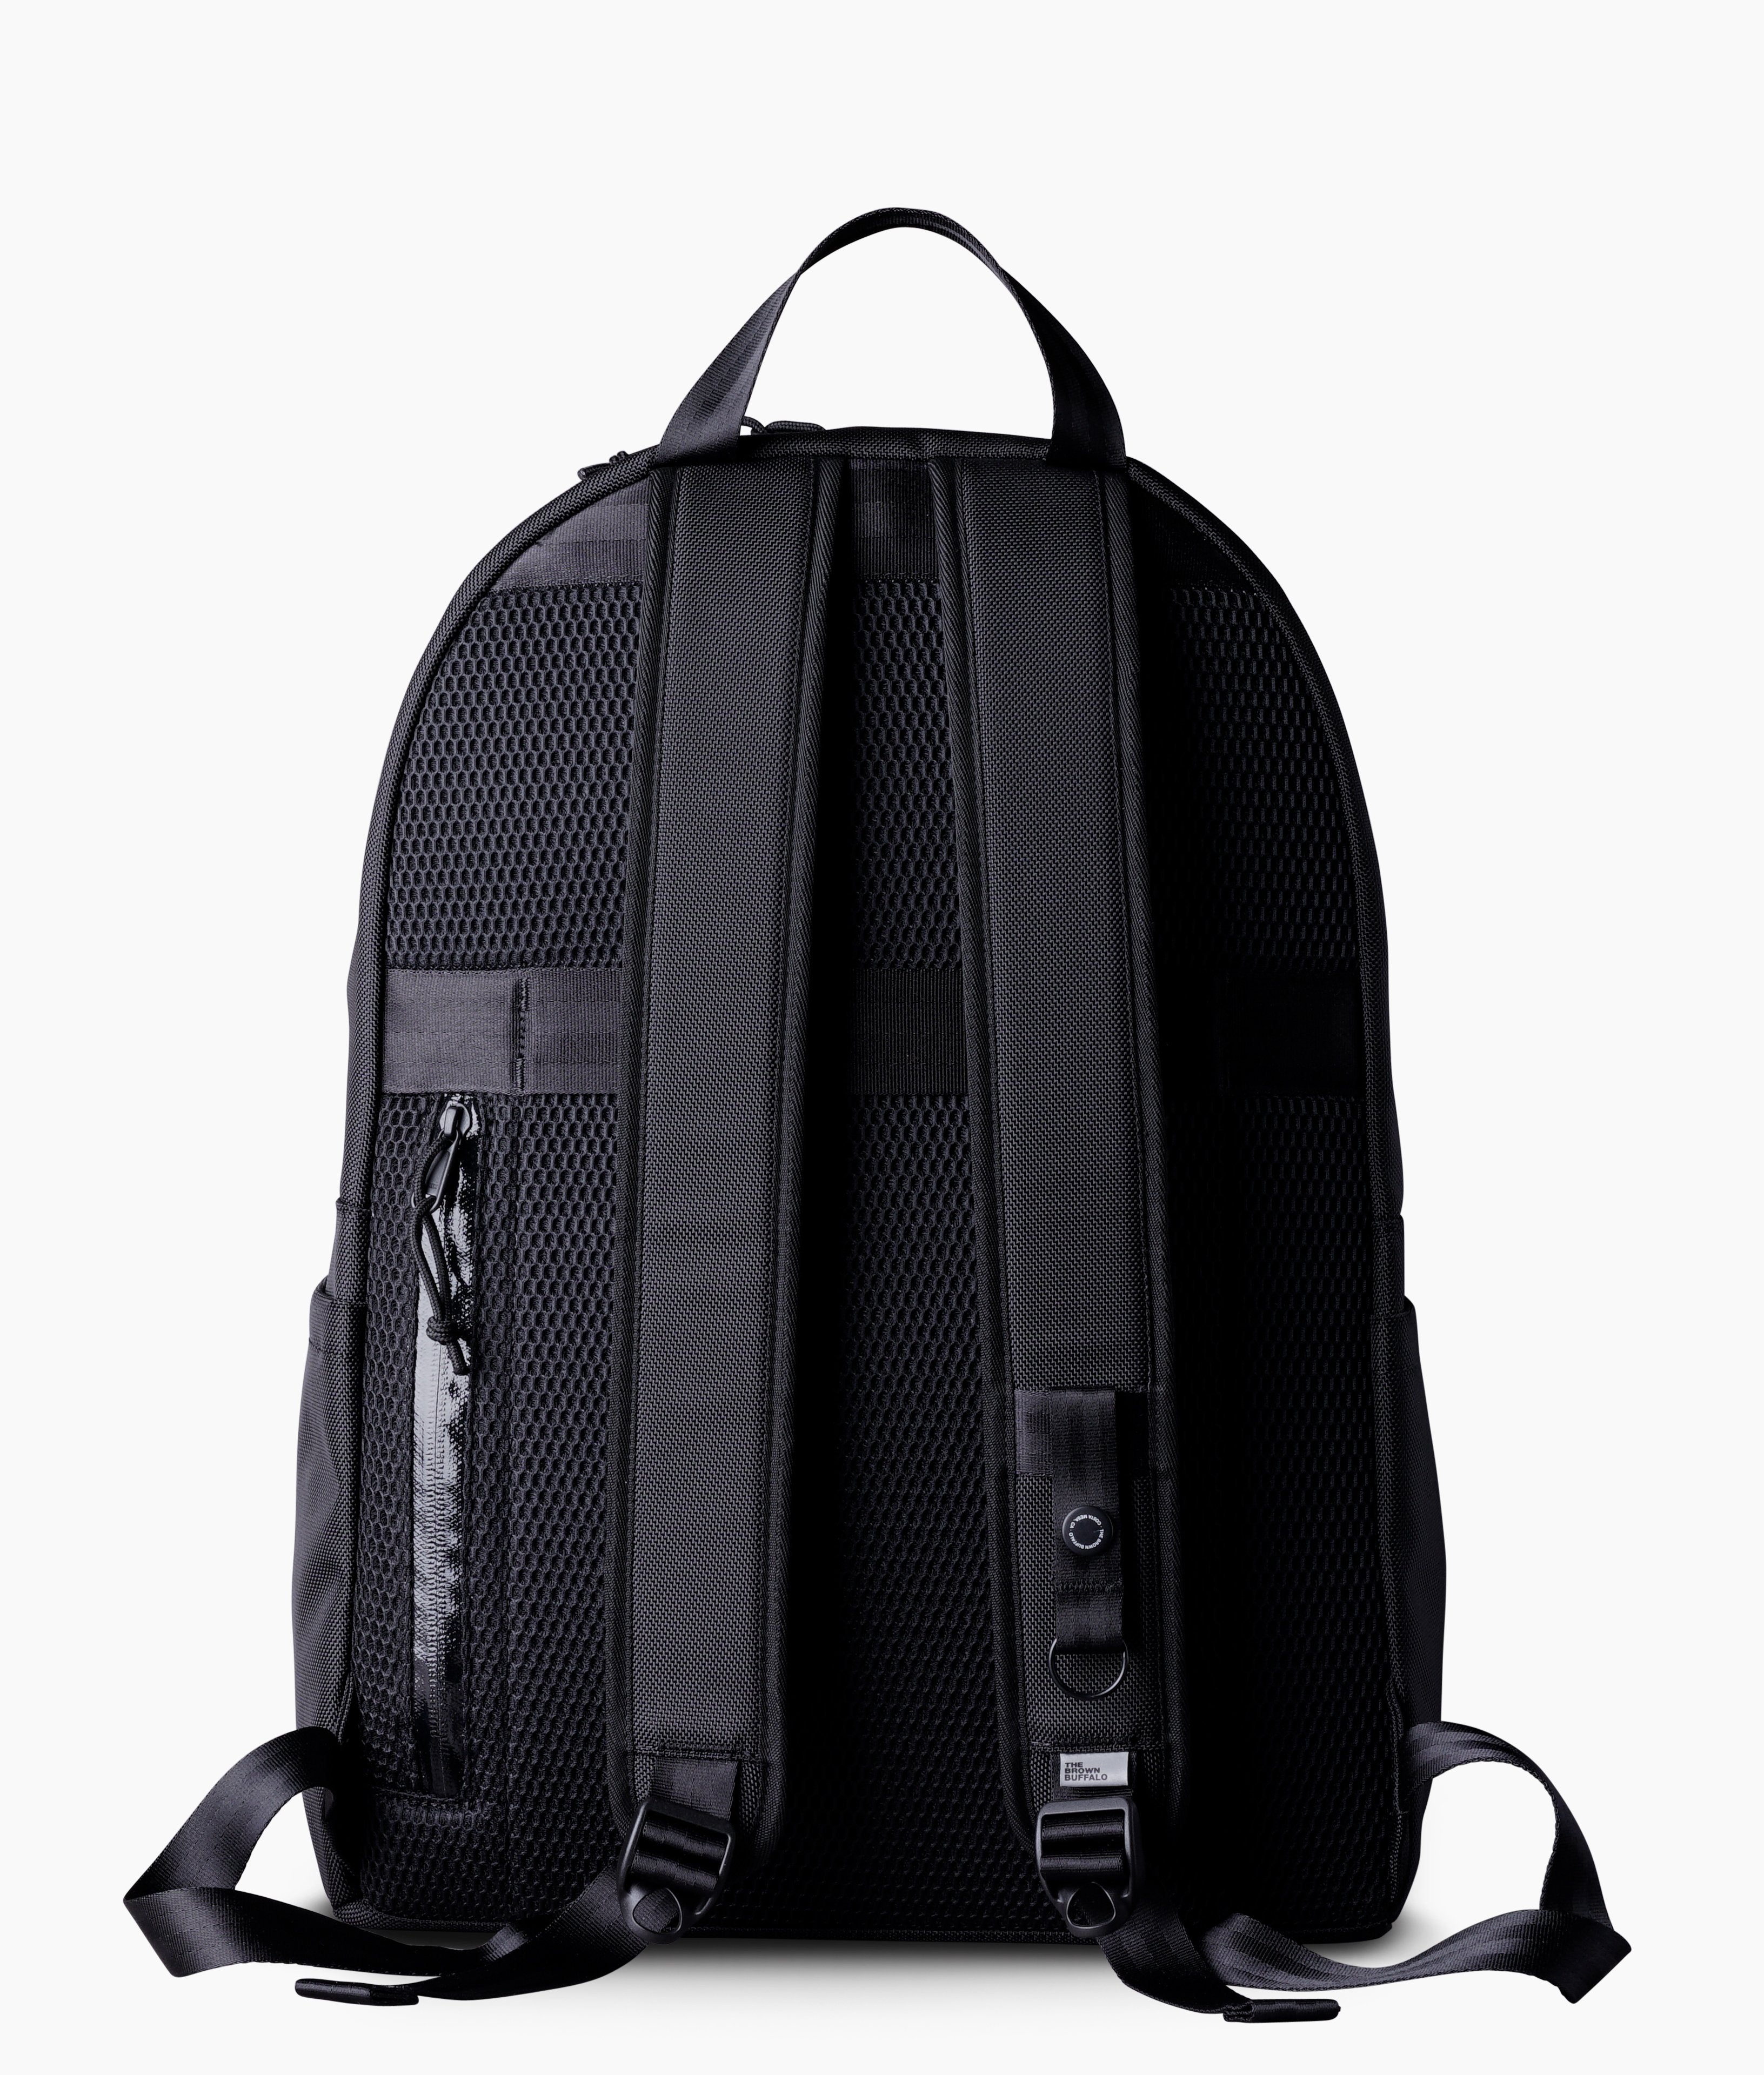 Standard Issue Backpack - 1680D Ballistic Black